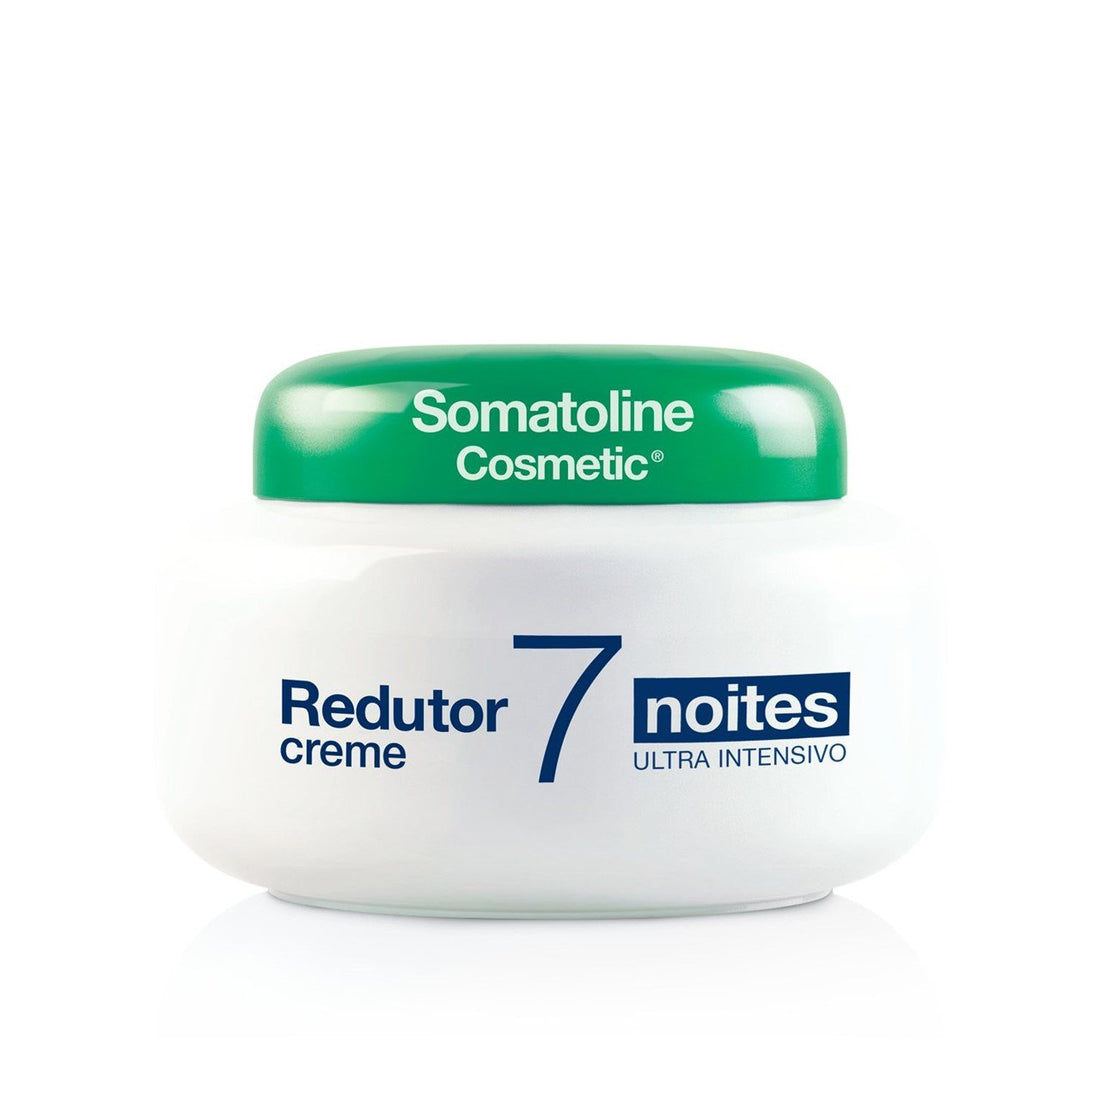 Somatoline Cosmetic Slimming Creme Ultra Intensivo 7 Noites 400ml